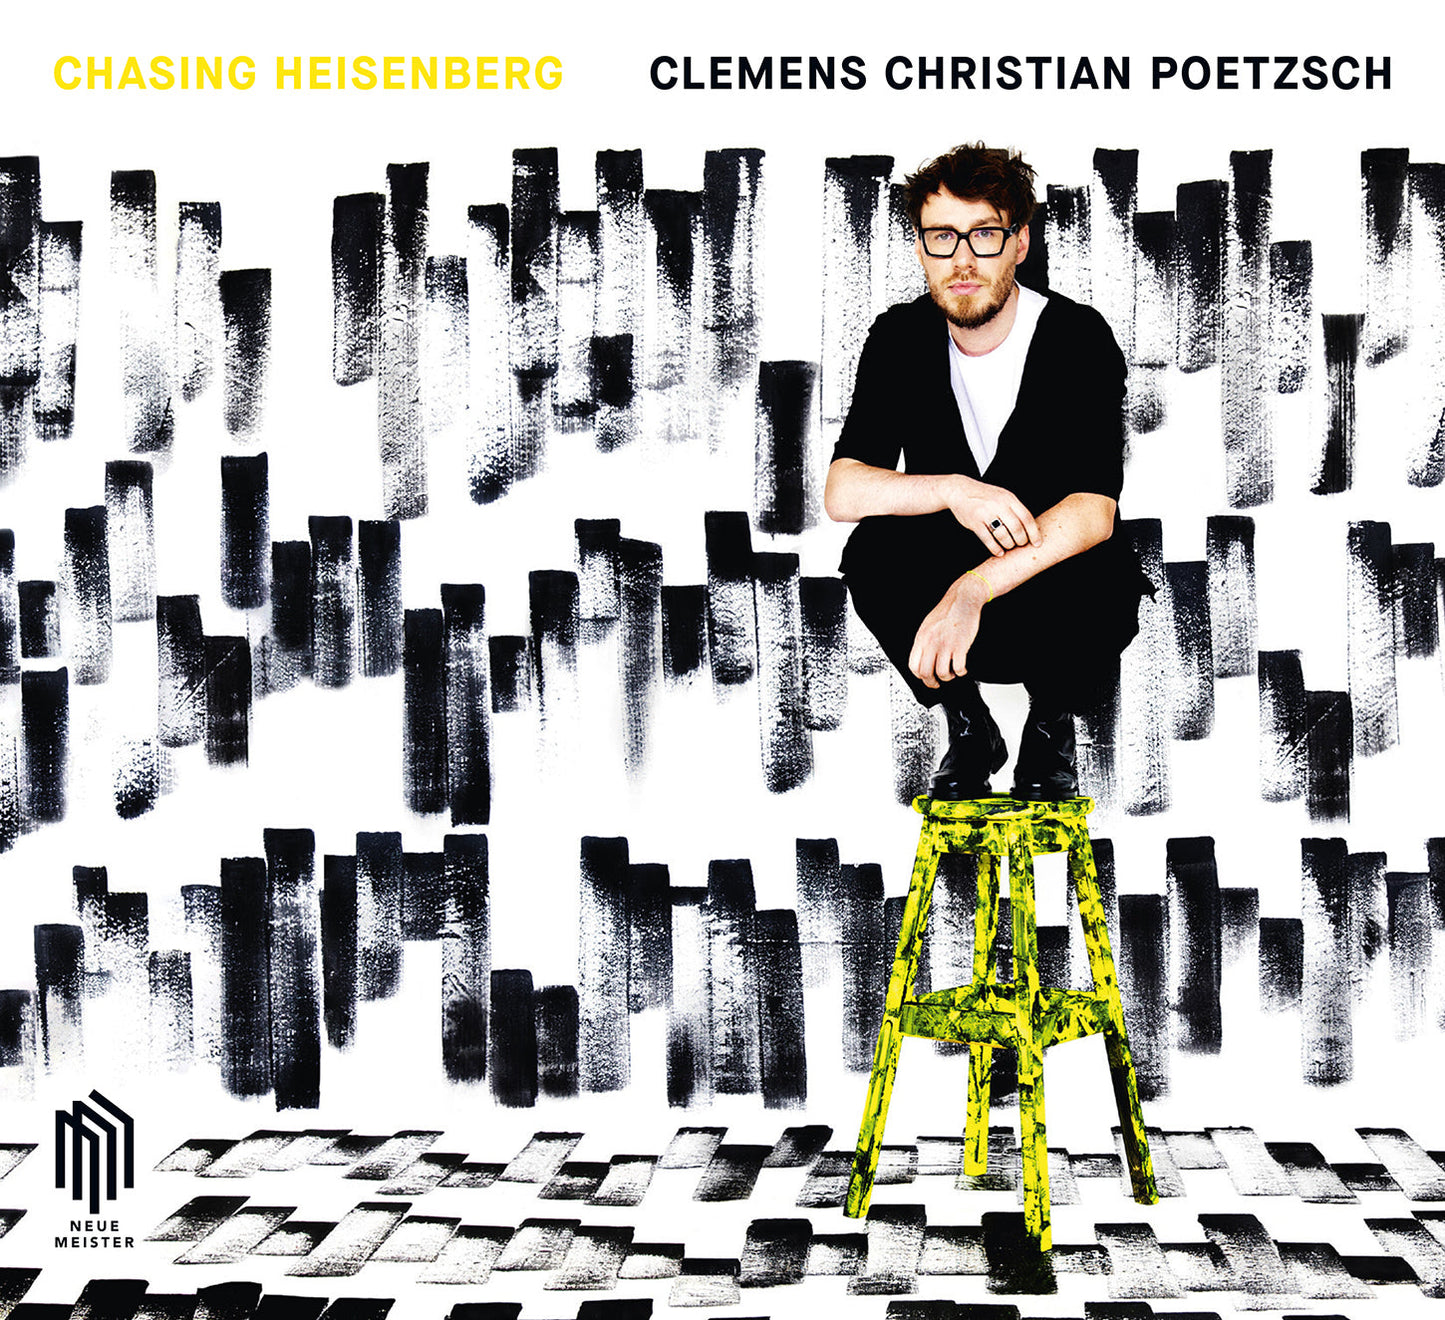 Poetzsch: Chasing Heisenberg